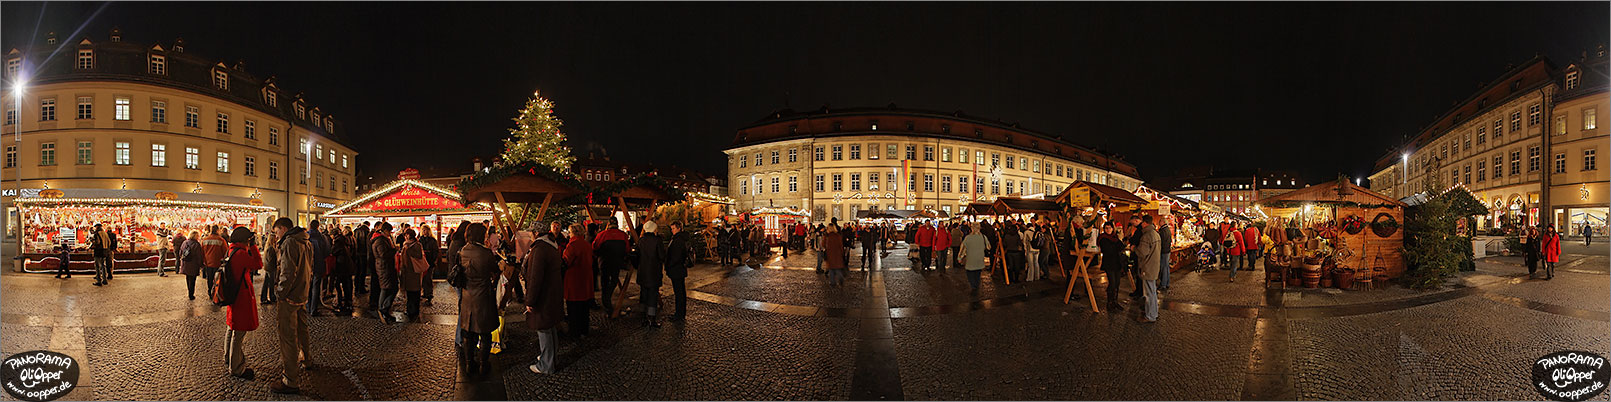 Weihnachtsmarkt Bamberg - Maxplatz - p012 - (c) by Oliver Opper